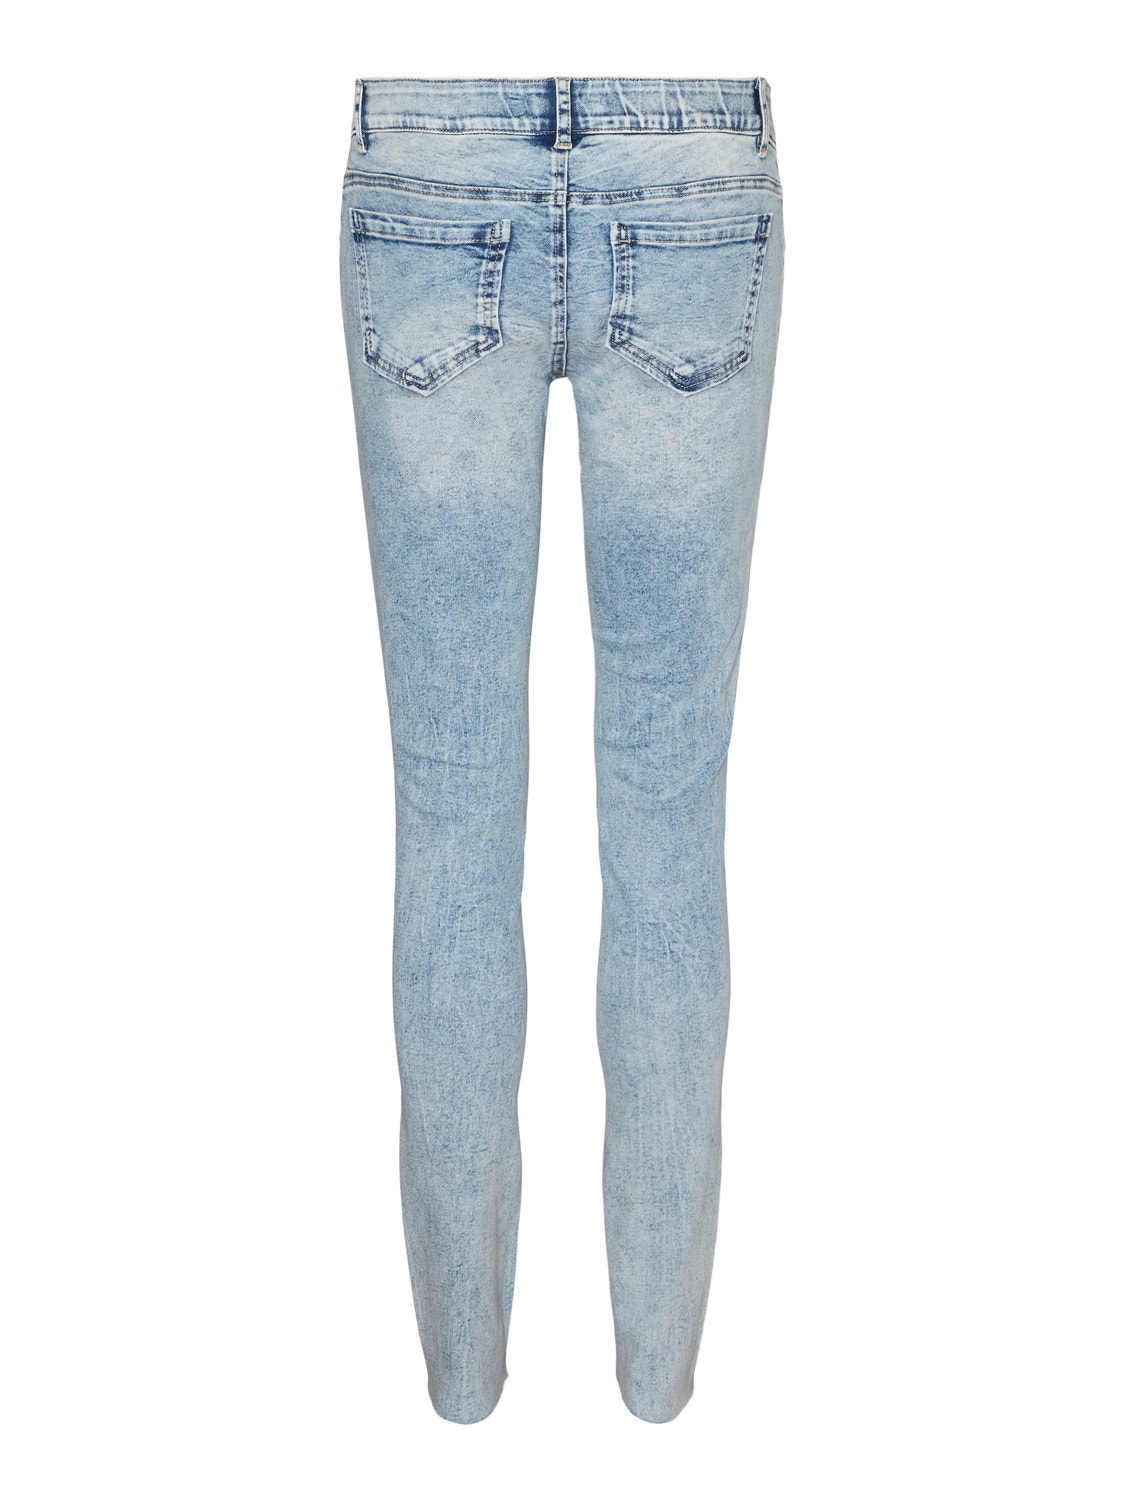 Zeeanemoon Wegversperring koppeling Slim Fit Low waist Jeans with 30% discount! | MAMA.LICIOUS®